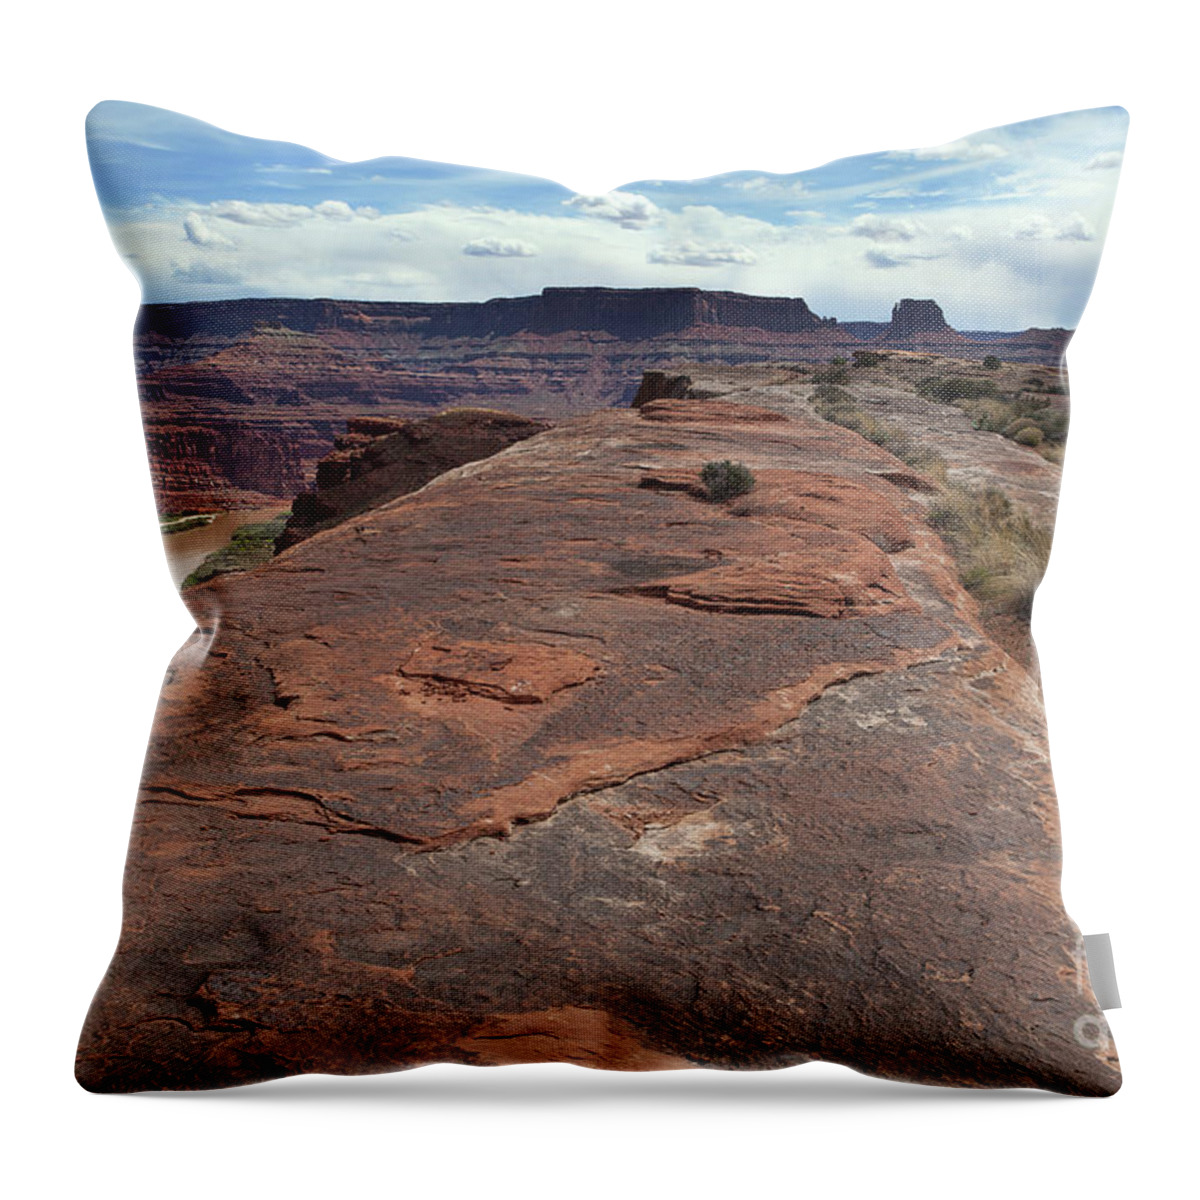 Utah Landscape Throw Pillow featuring the photograph The Flight Deck by Jim Garrison